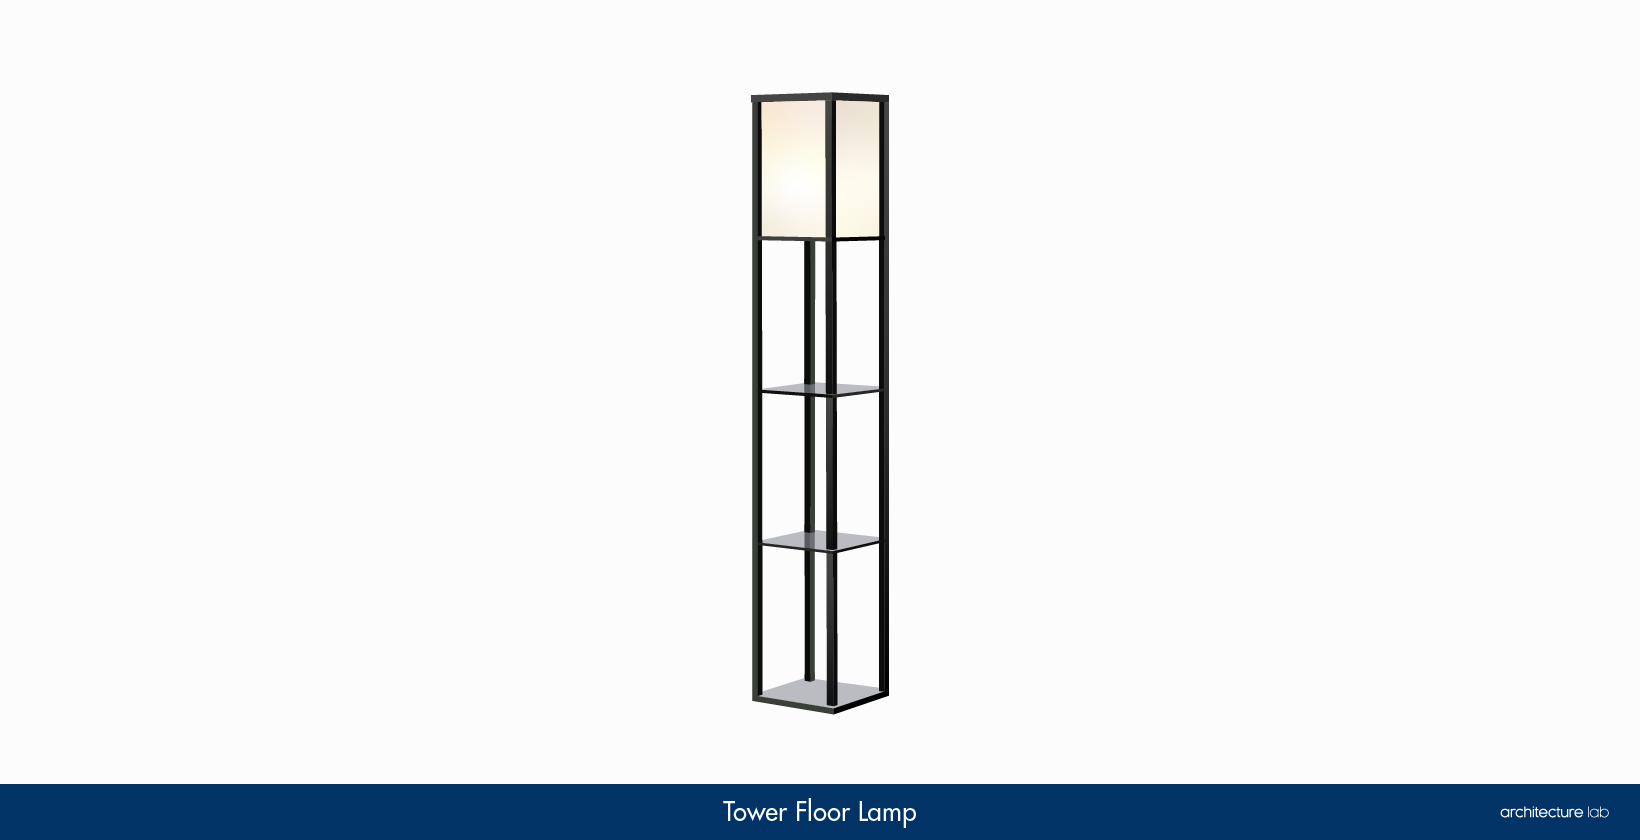 5. Tower floor lamp